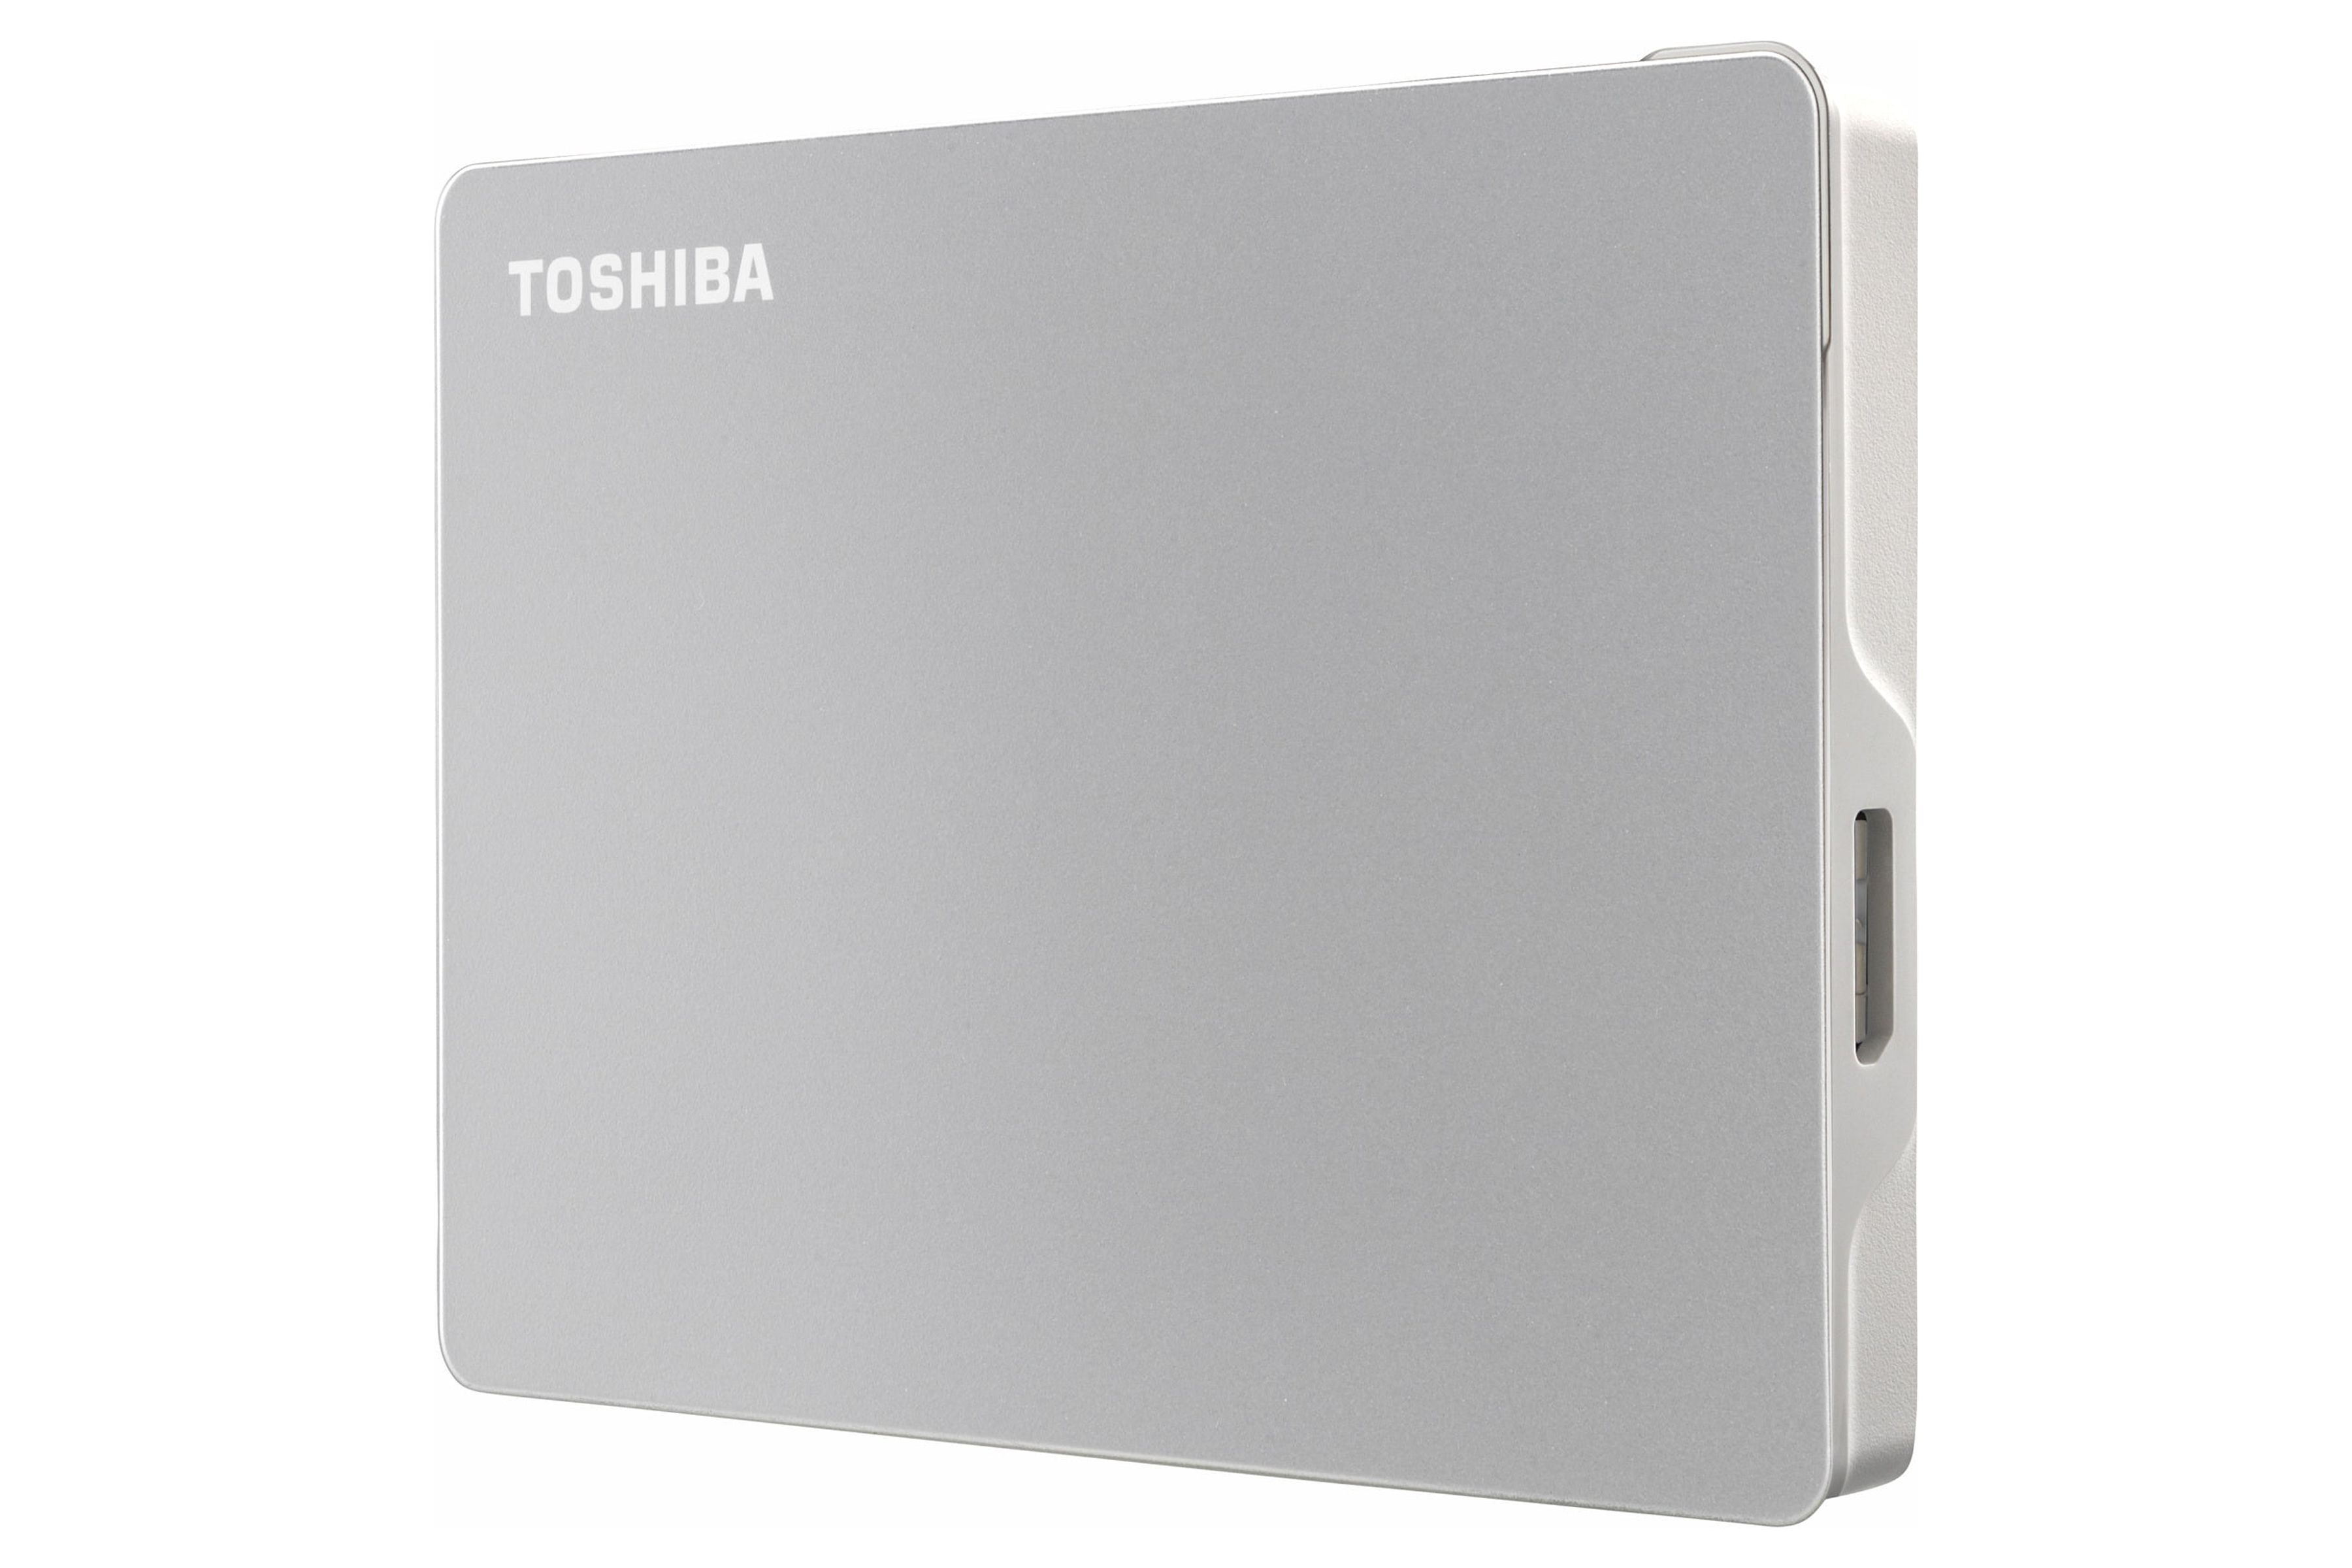 Toshiba Canvio Flex Portable External Hard Drive 1TB Silver - image 3 of 5